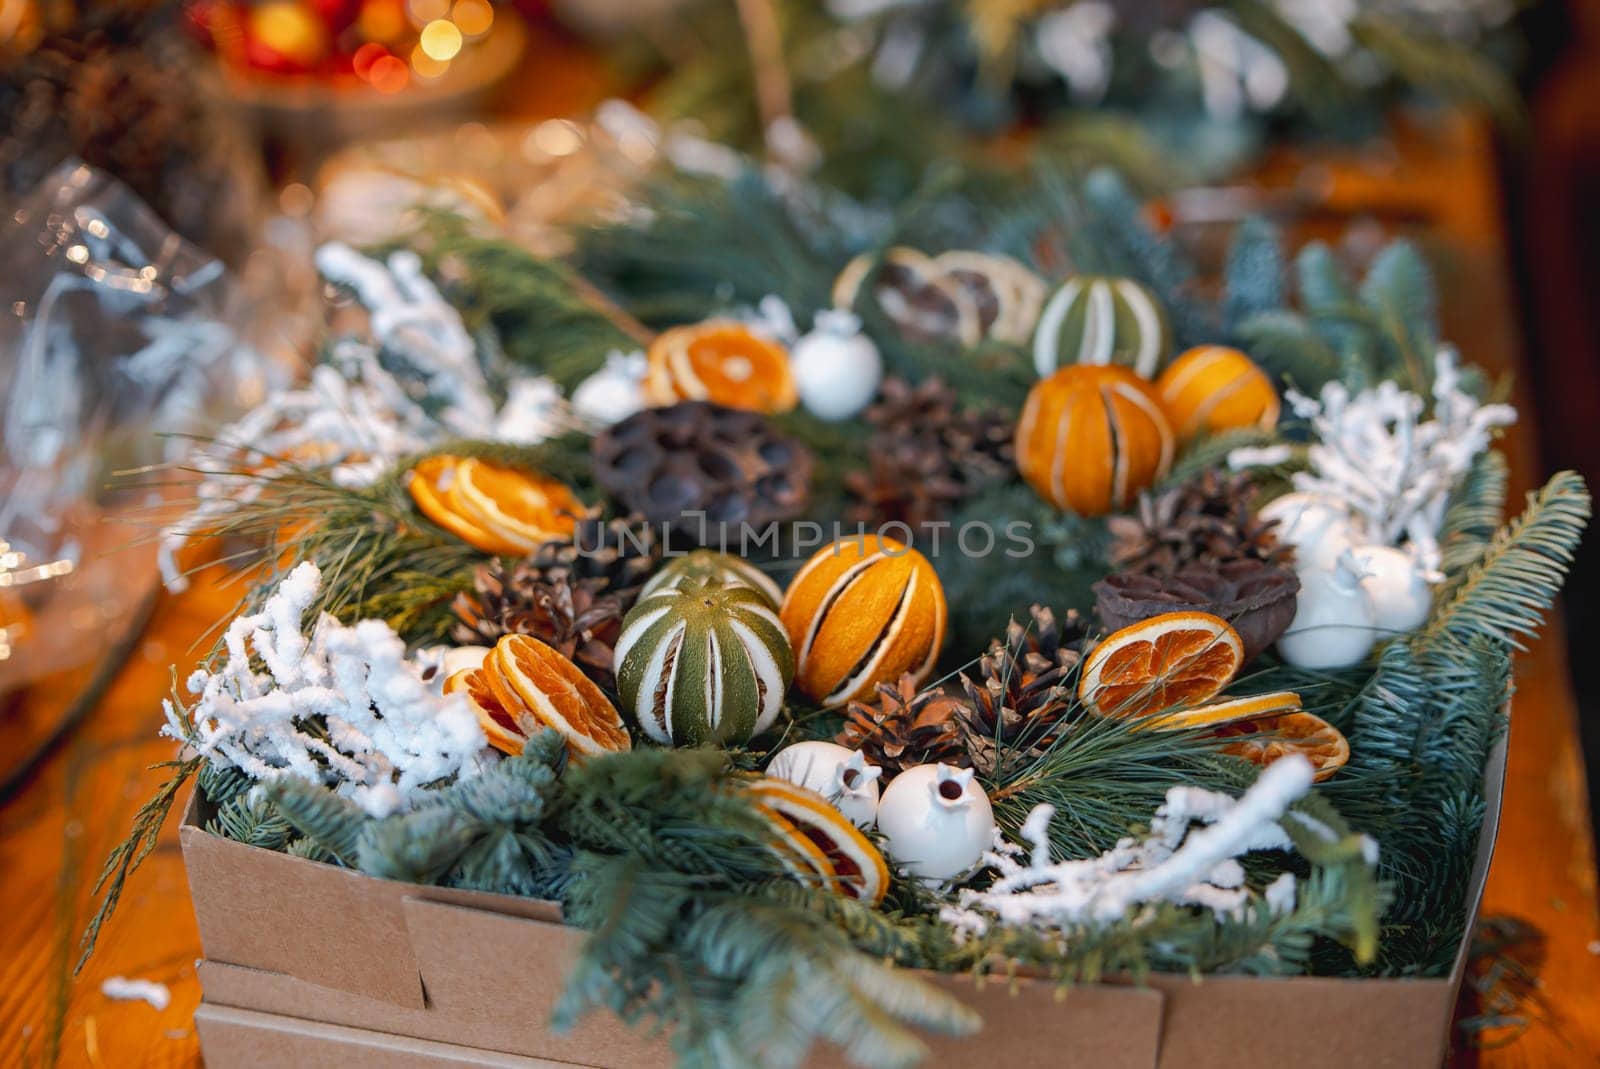 Crafting workshop focusing on Christmas wreath making and New Year's decor. by teksomolika